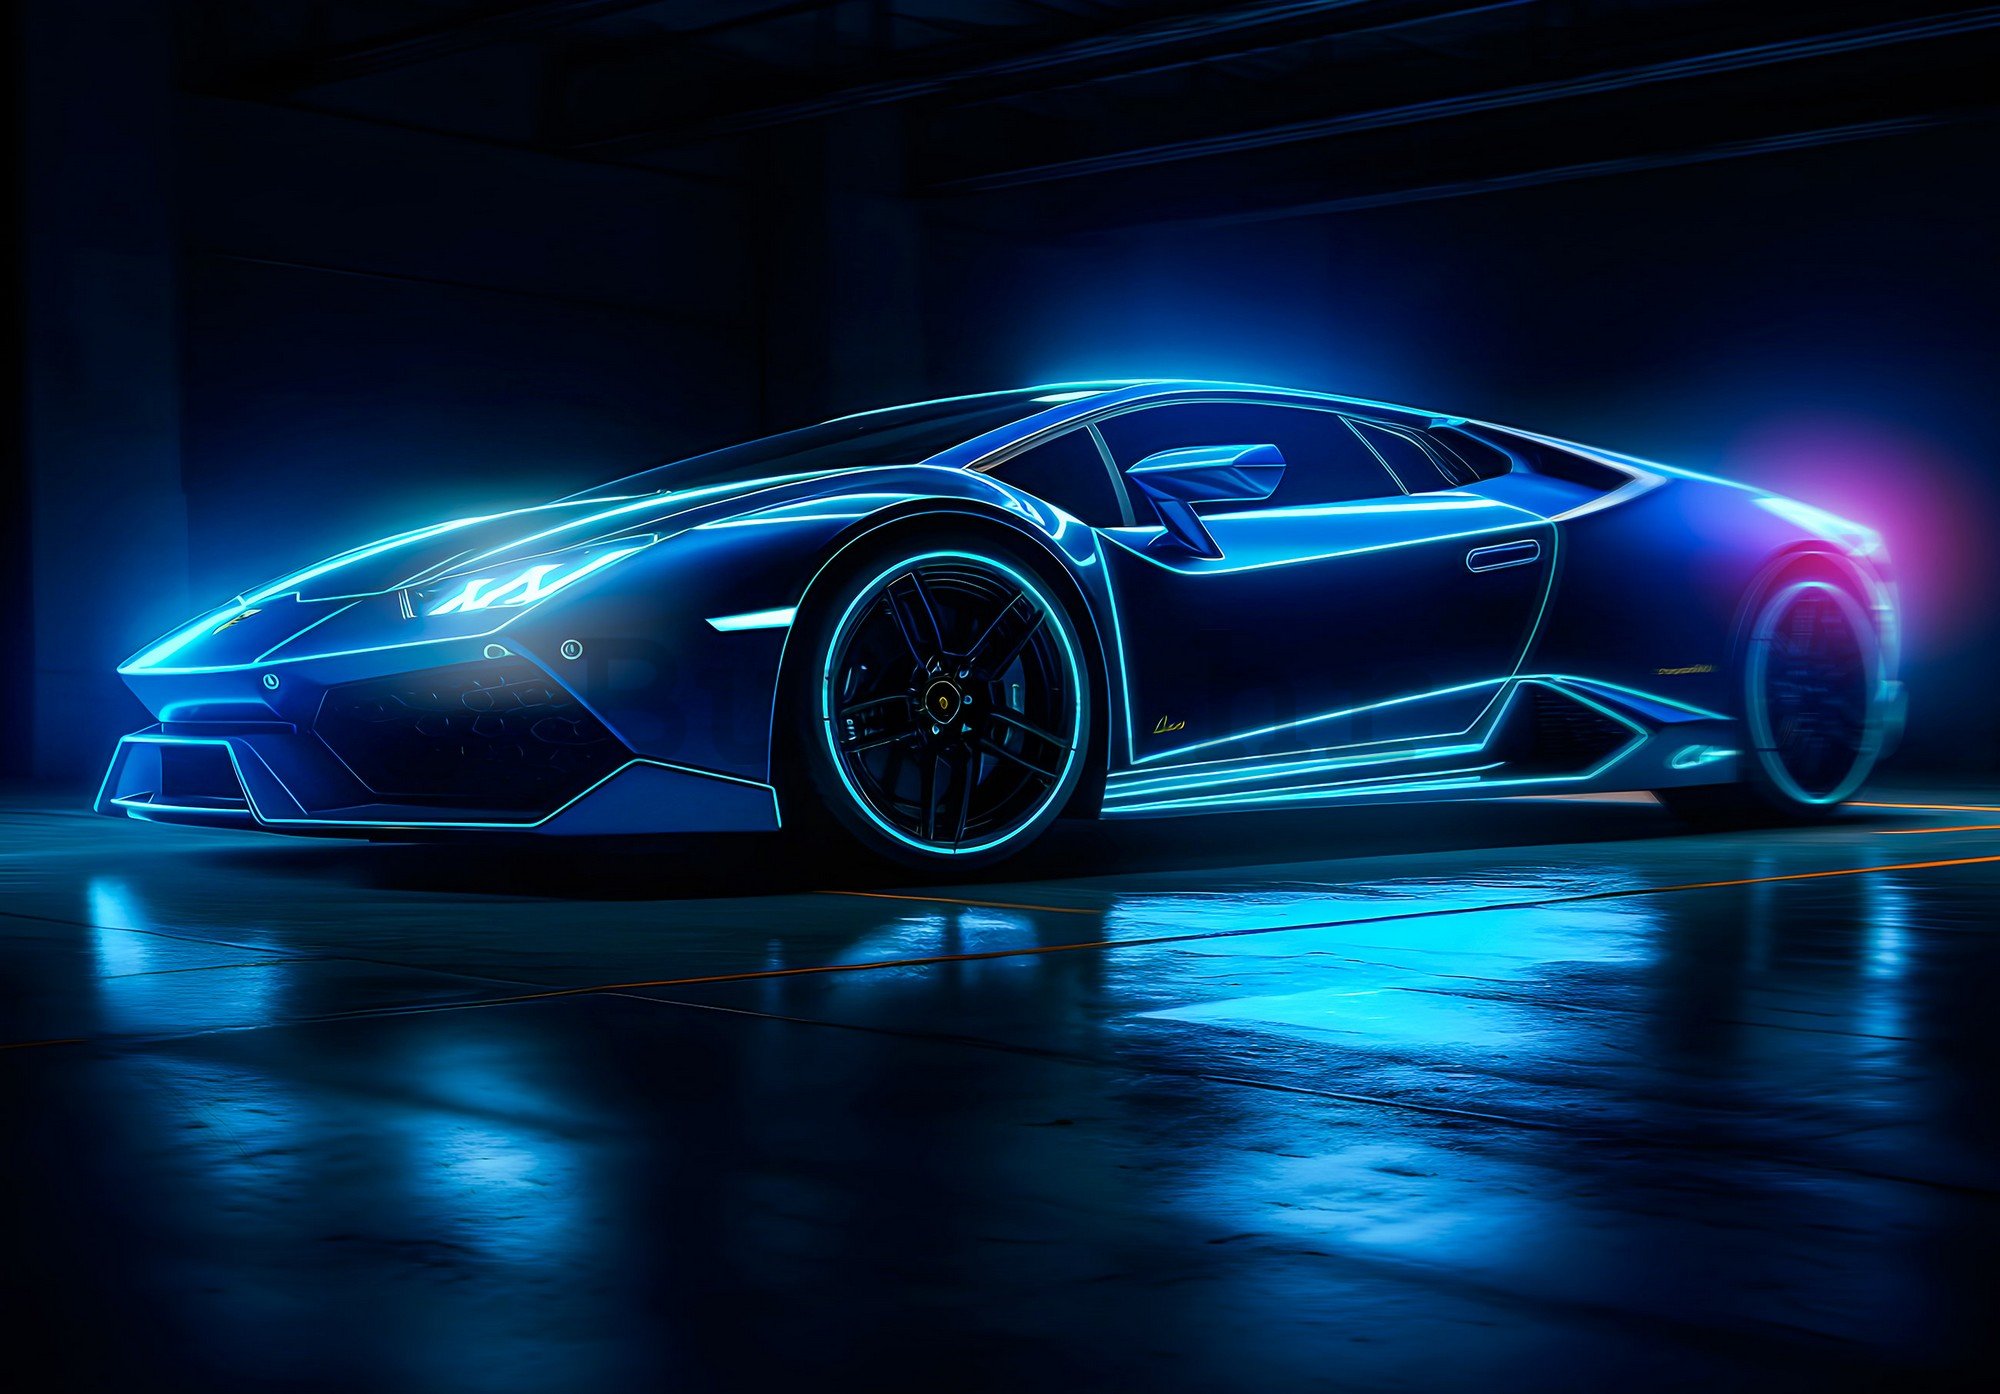 Vlies foto tapeta: Car Lamborghini luxurious neon - 416x254 cm